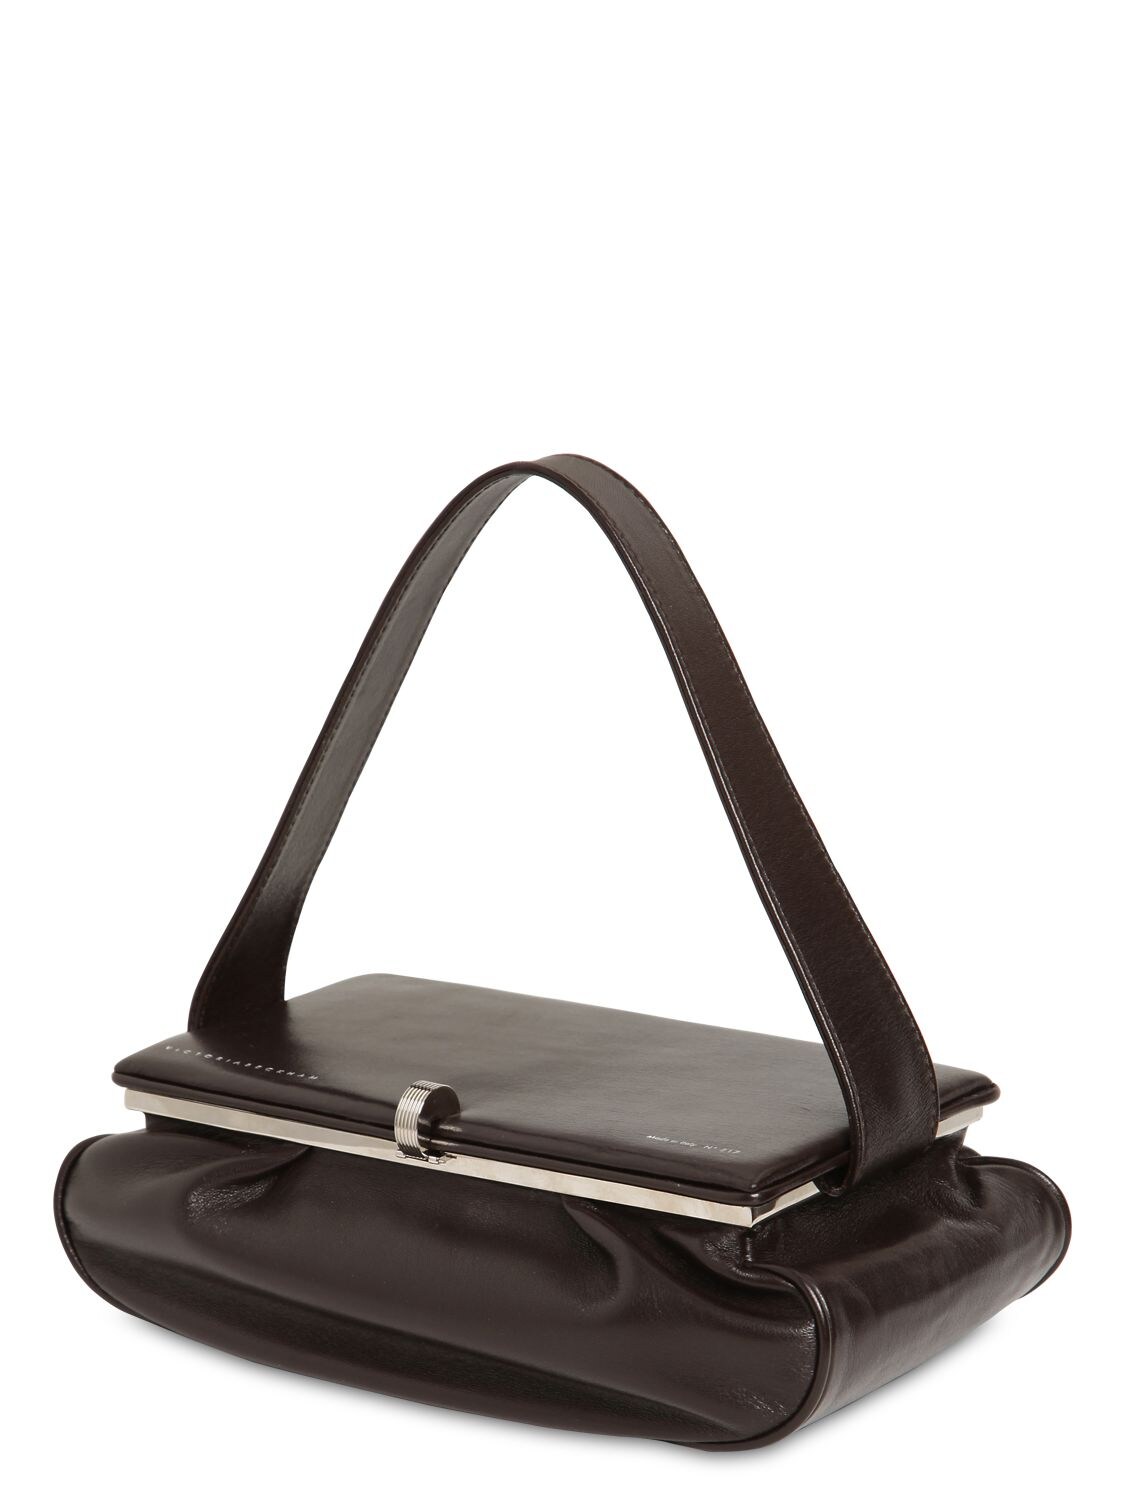 Victoria Beckham Large Powder Box Leather Top Handle Bag In Dark Brown